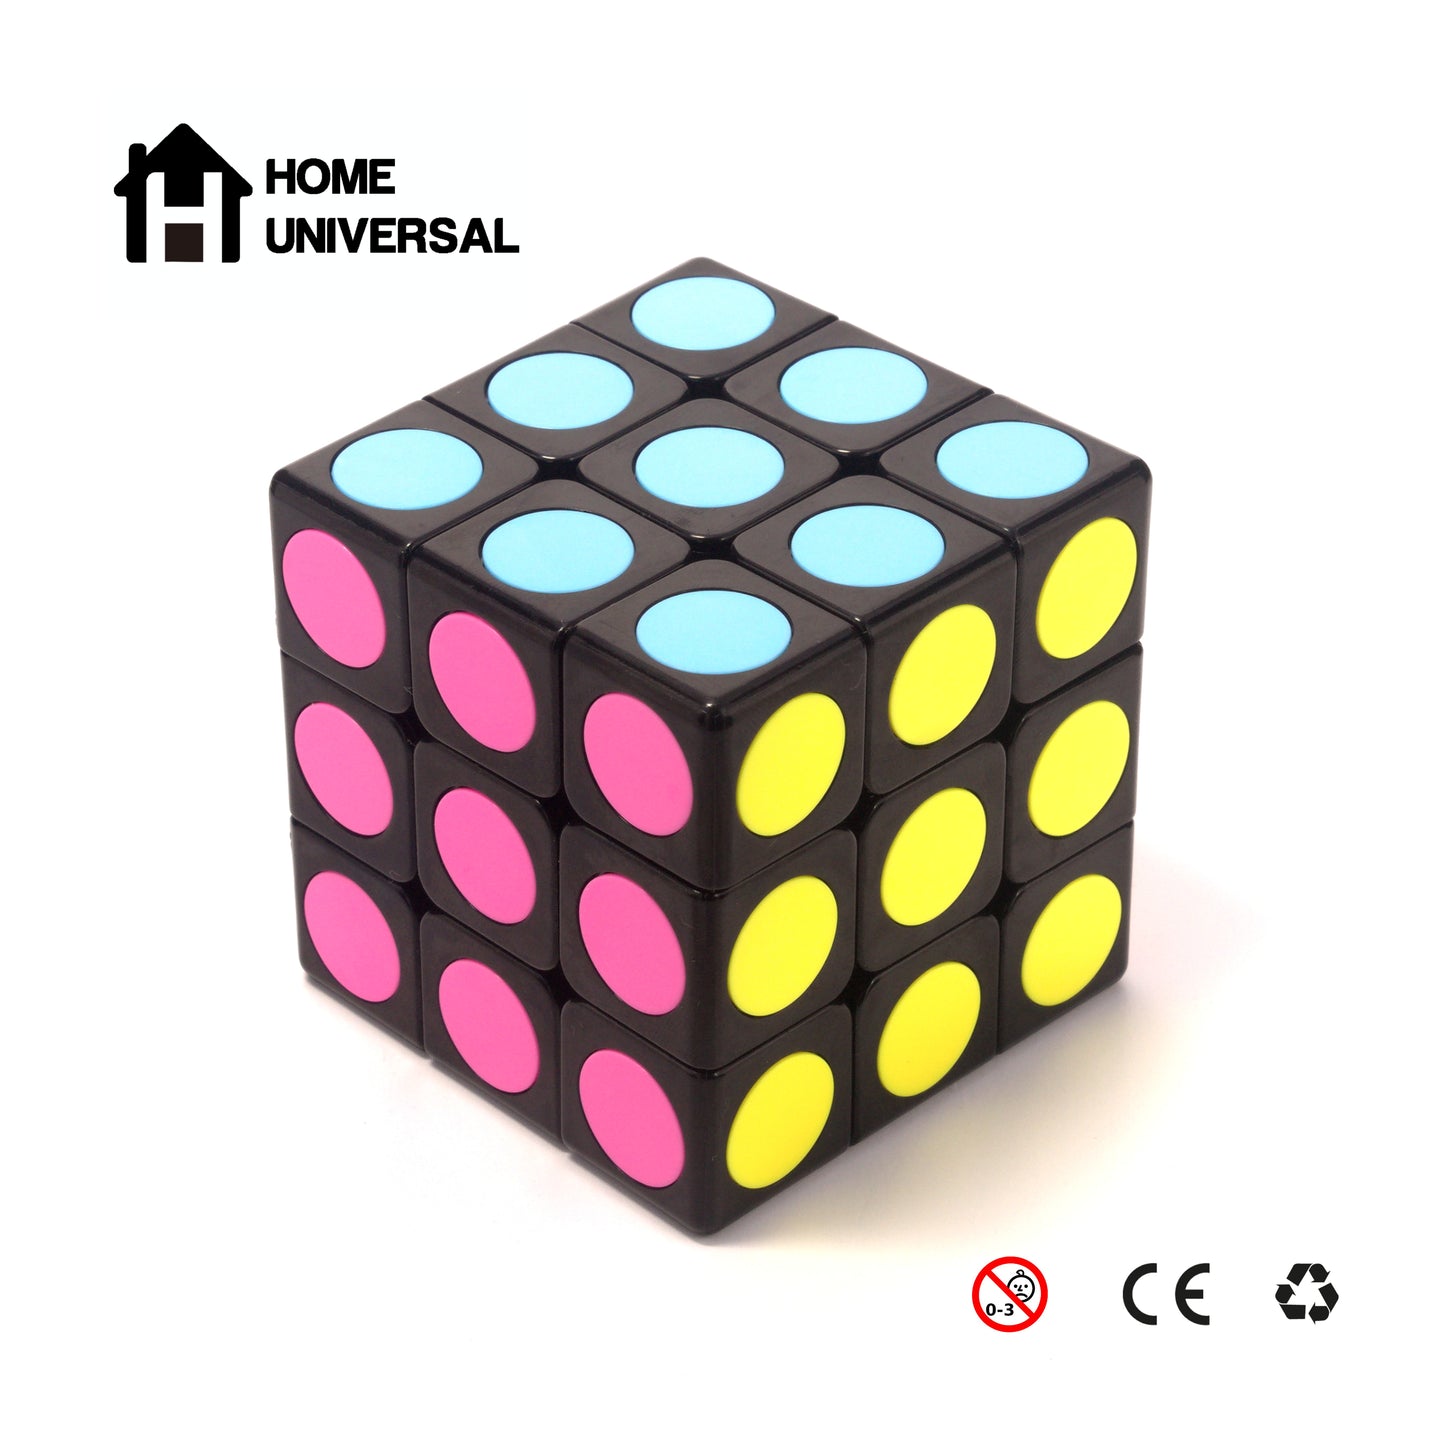 Home UNIVERSAL | Cubo Rompecabezas (Topos)